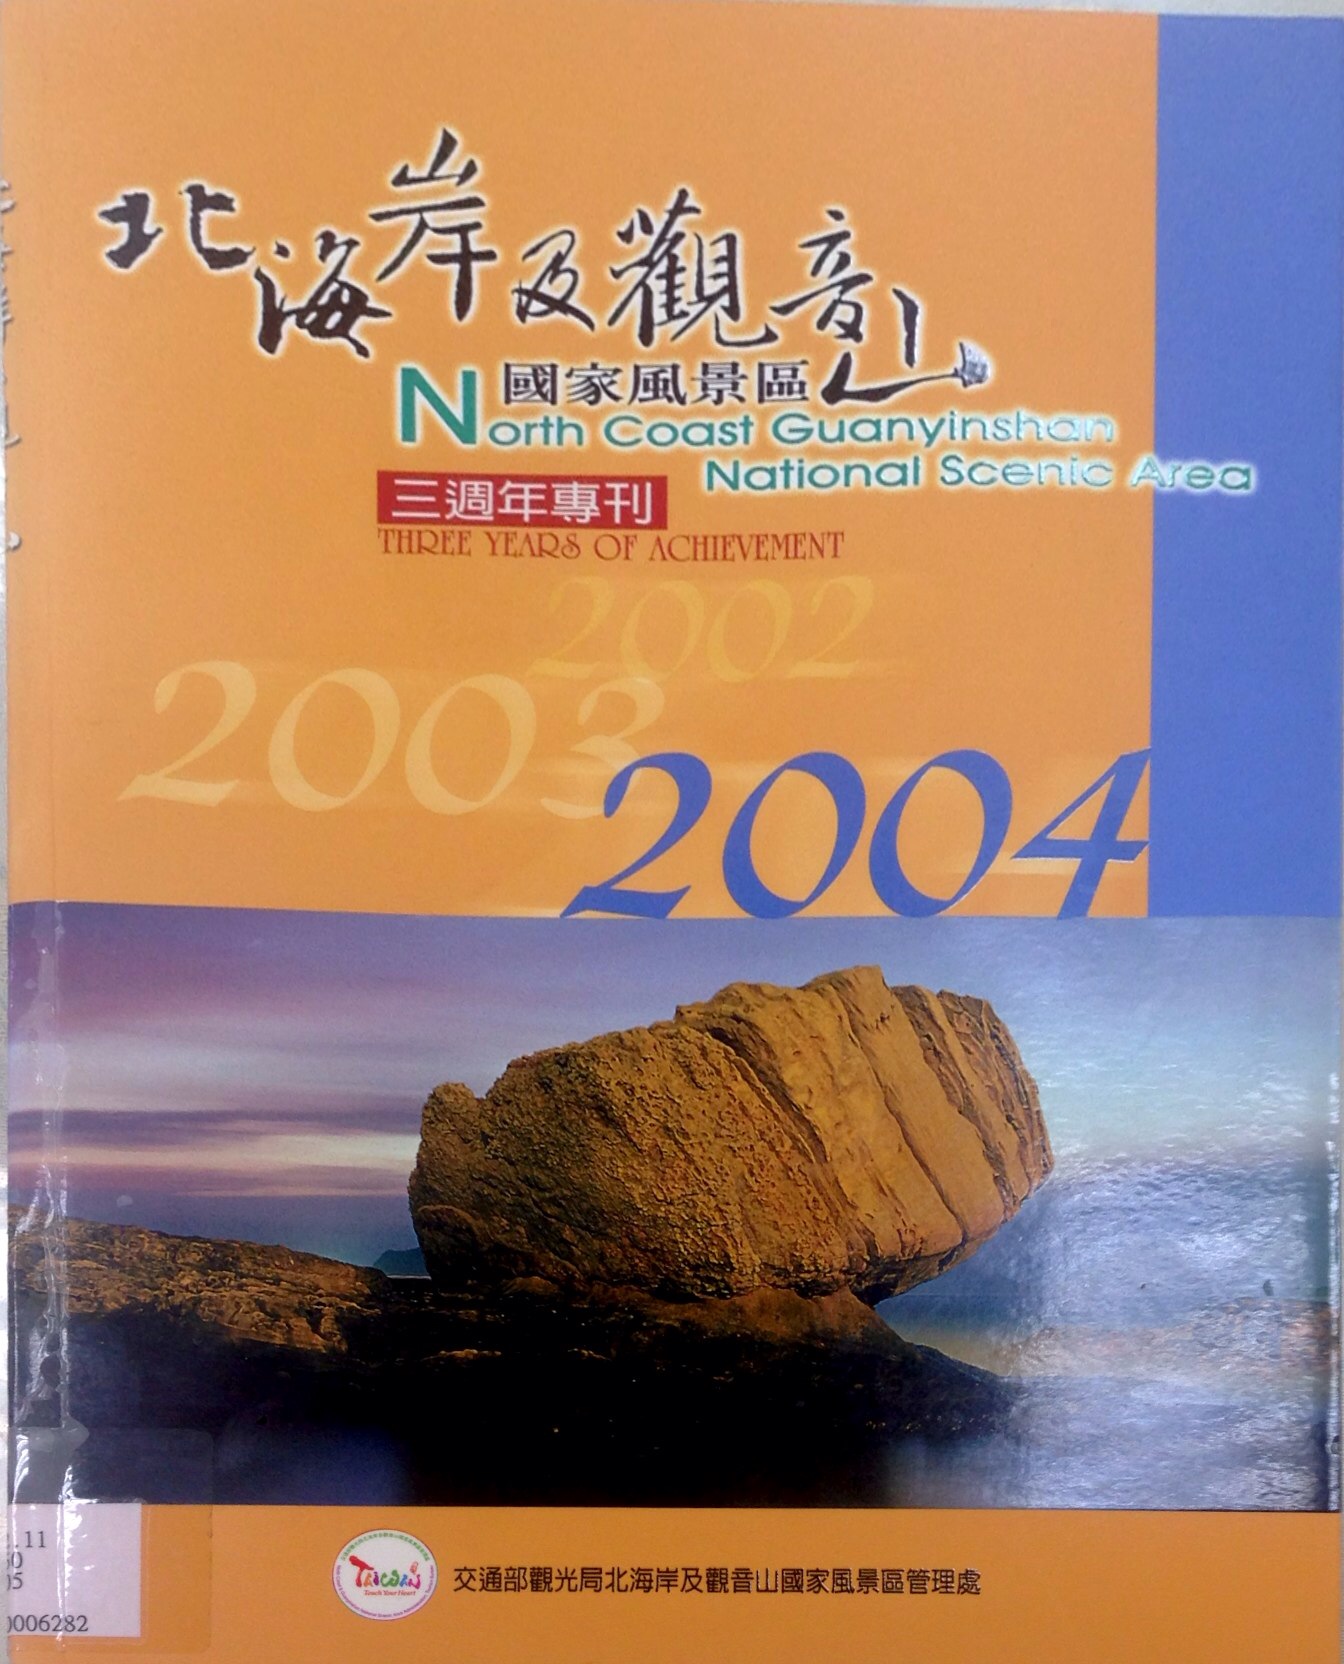 北海岸及觀音山國家風景區三週年專刊＝North Coast Guanyinshan National Scenic Area three yearas of achievement